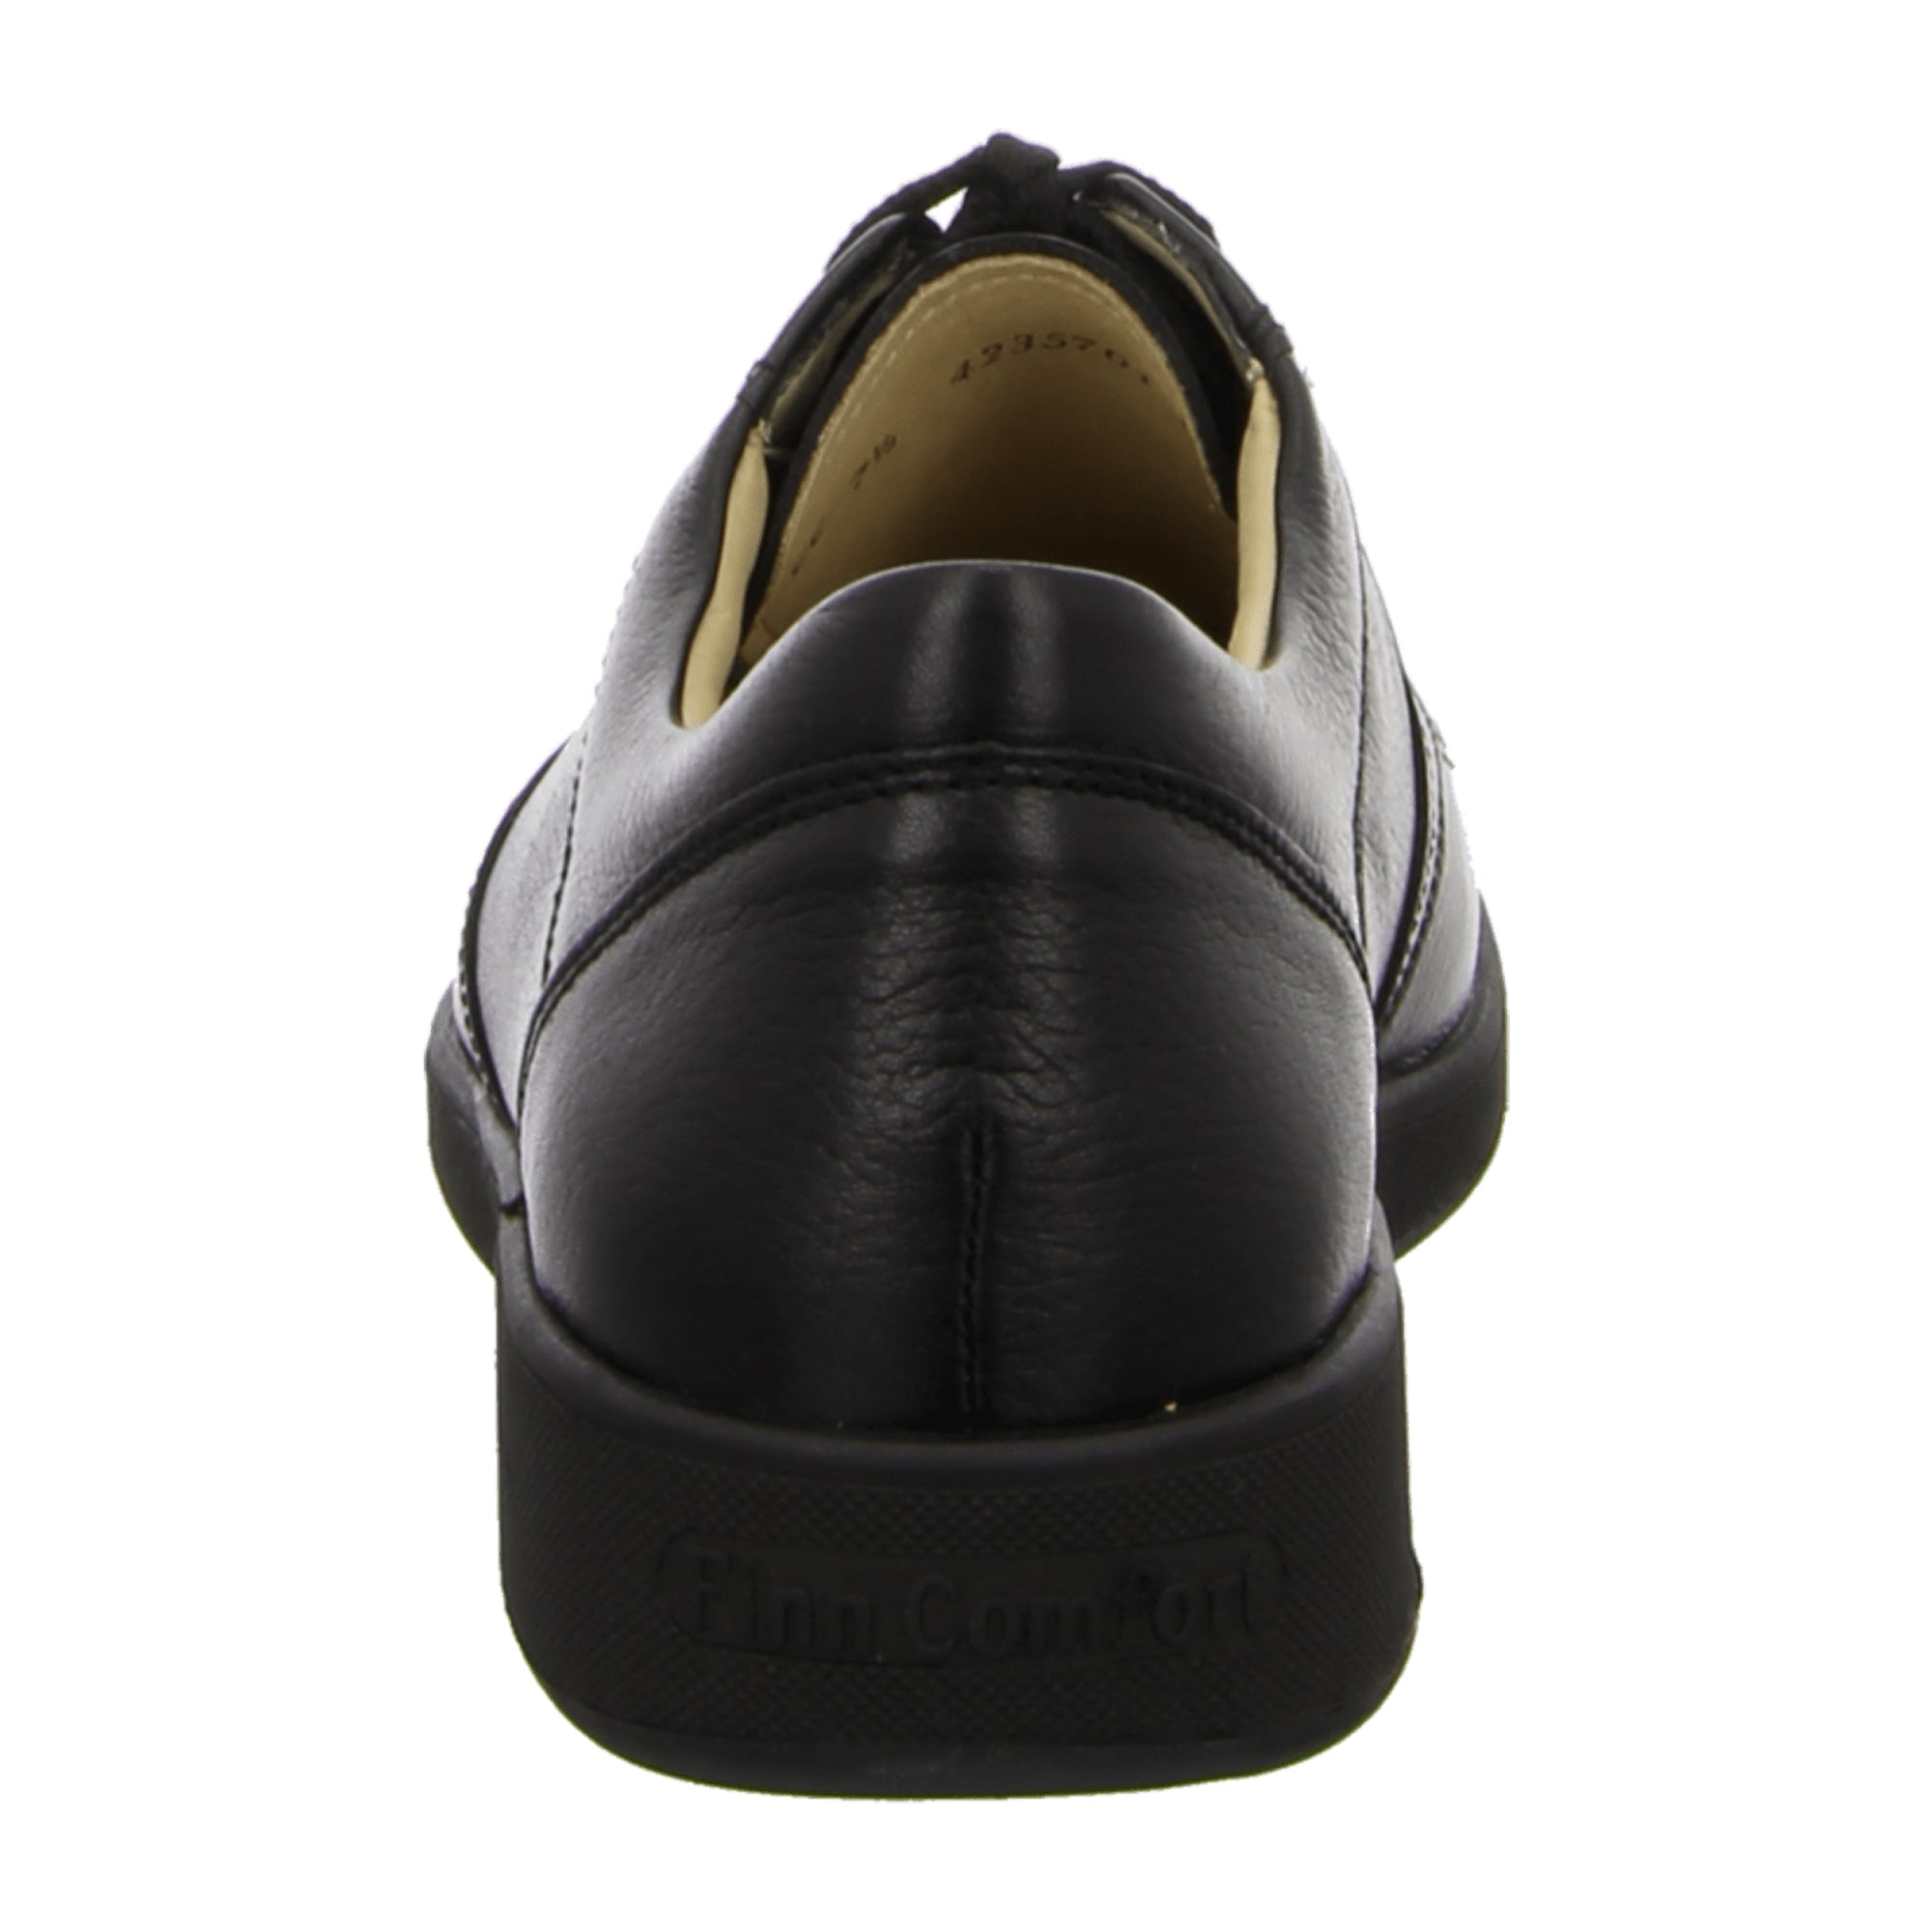 Finn Comfort Edmonton Men's Black Comfort Shoes - Durable & Stylish